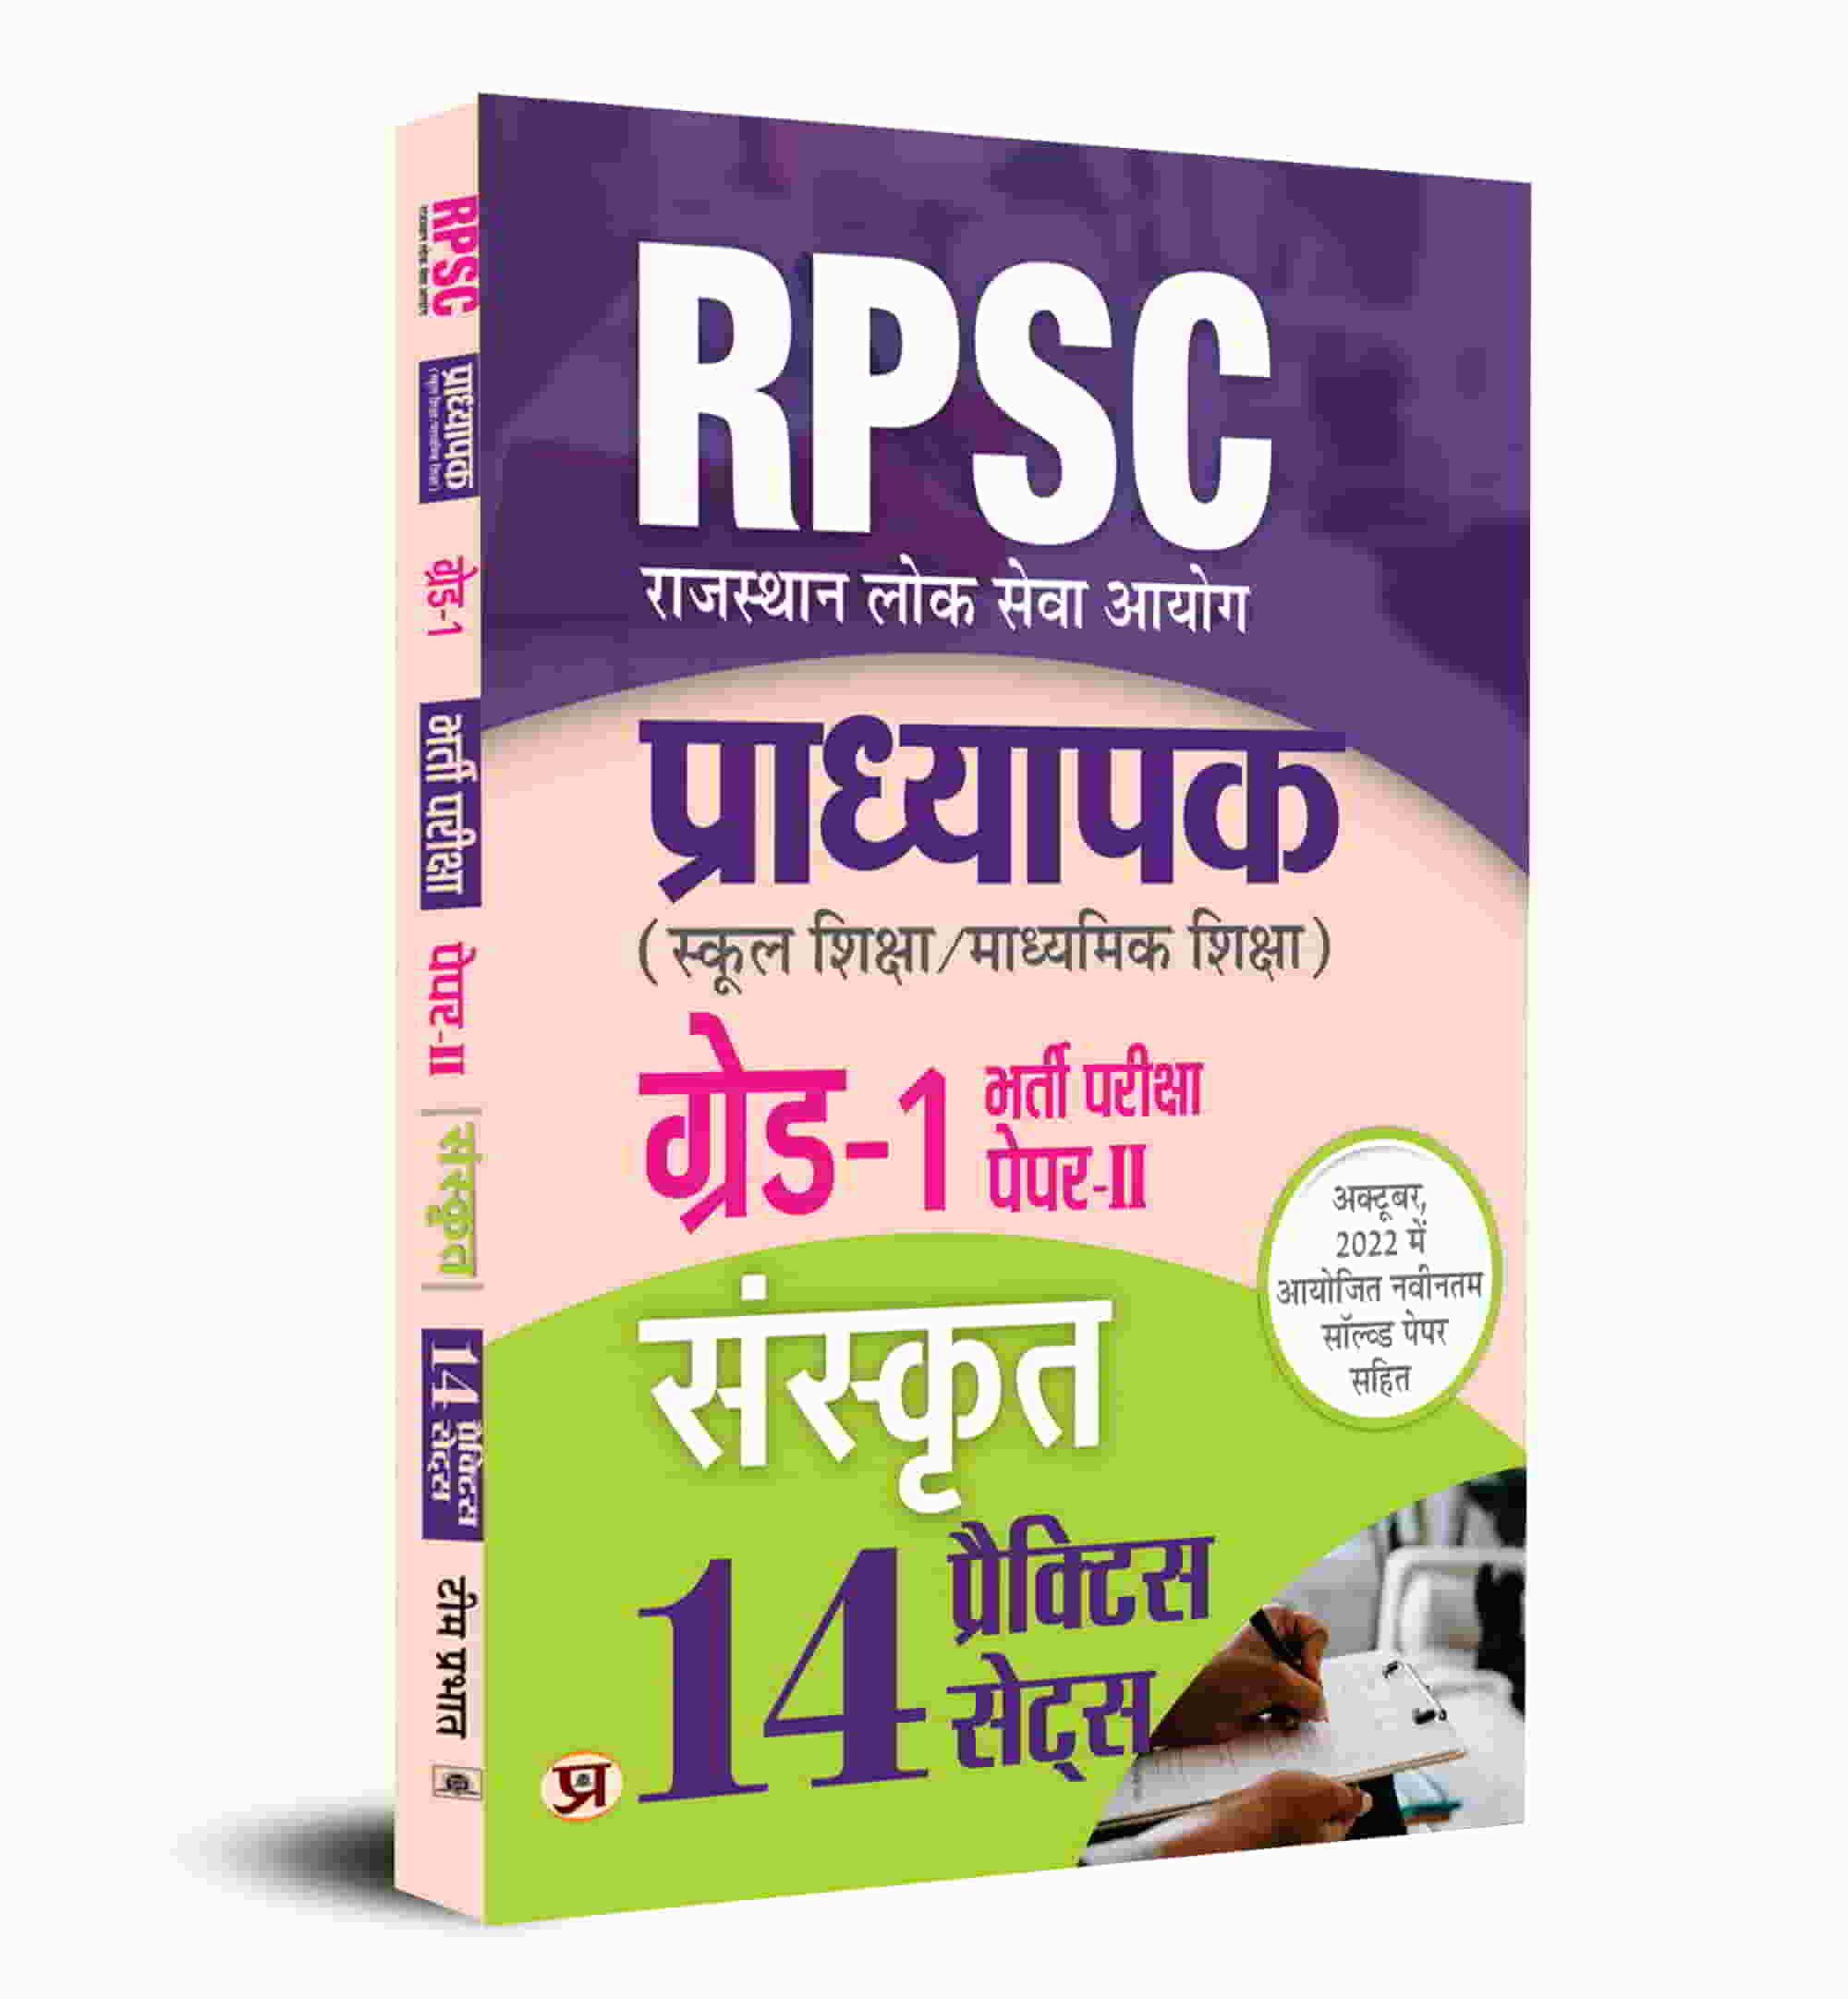 RPSC Professor School Education / Secondary Education Recruitment Exam (PAPER-II ) Subject Sanskrit Grade - 1 14 Practice Sets Book In Hindi